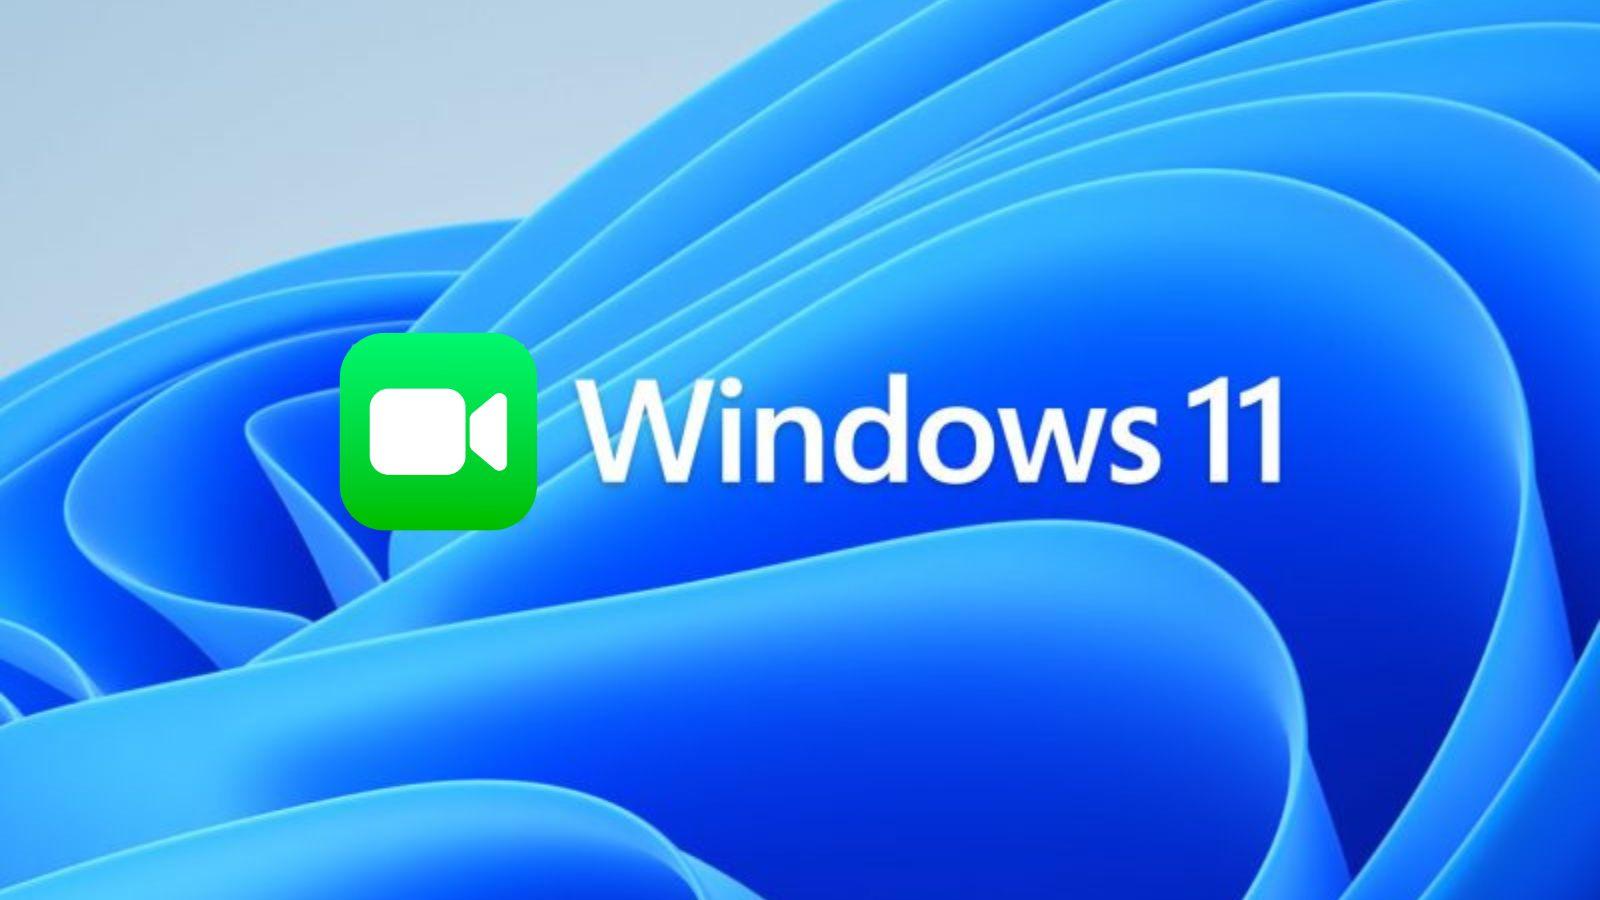 Facetime icon on Windows 11 logo